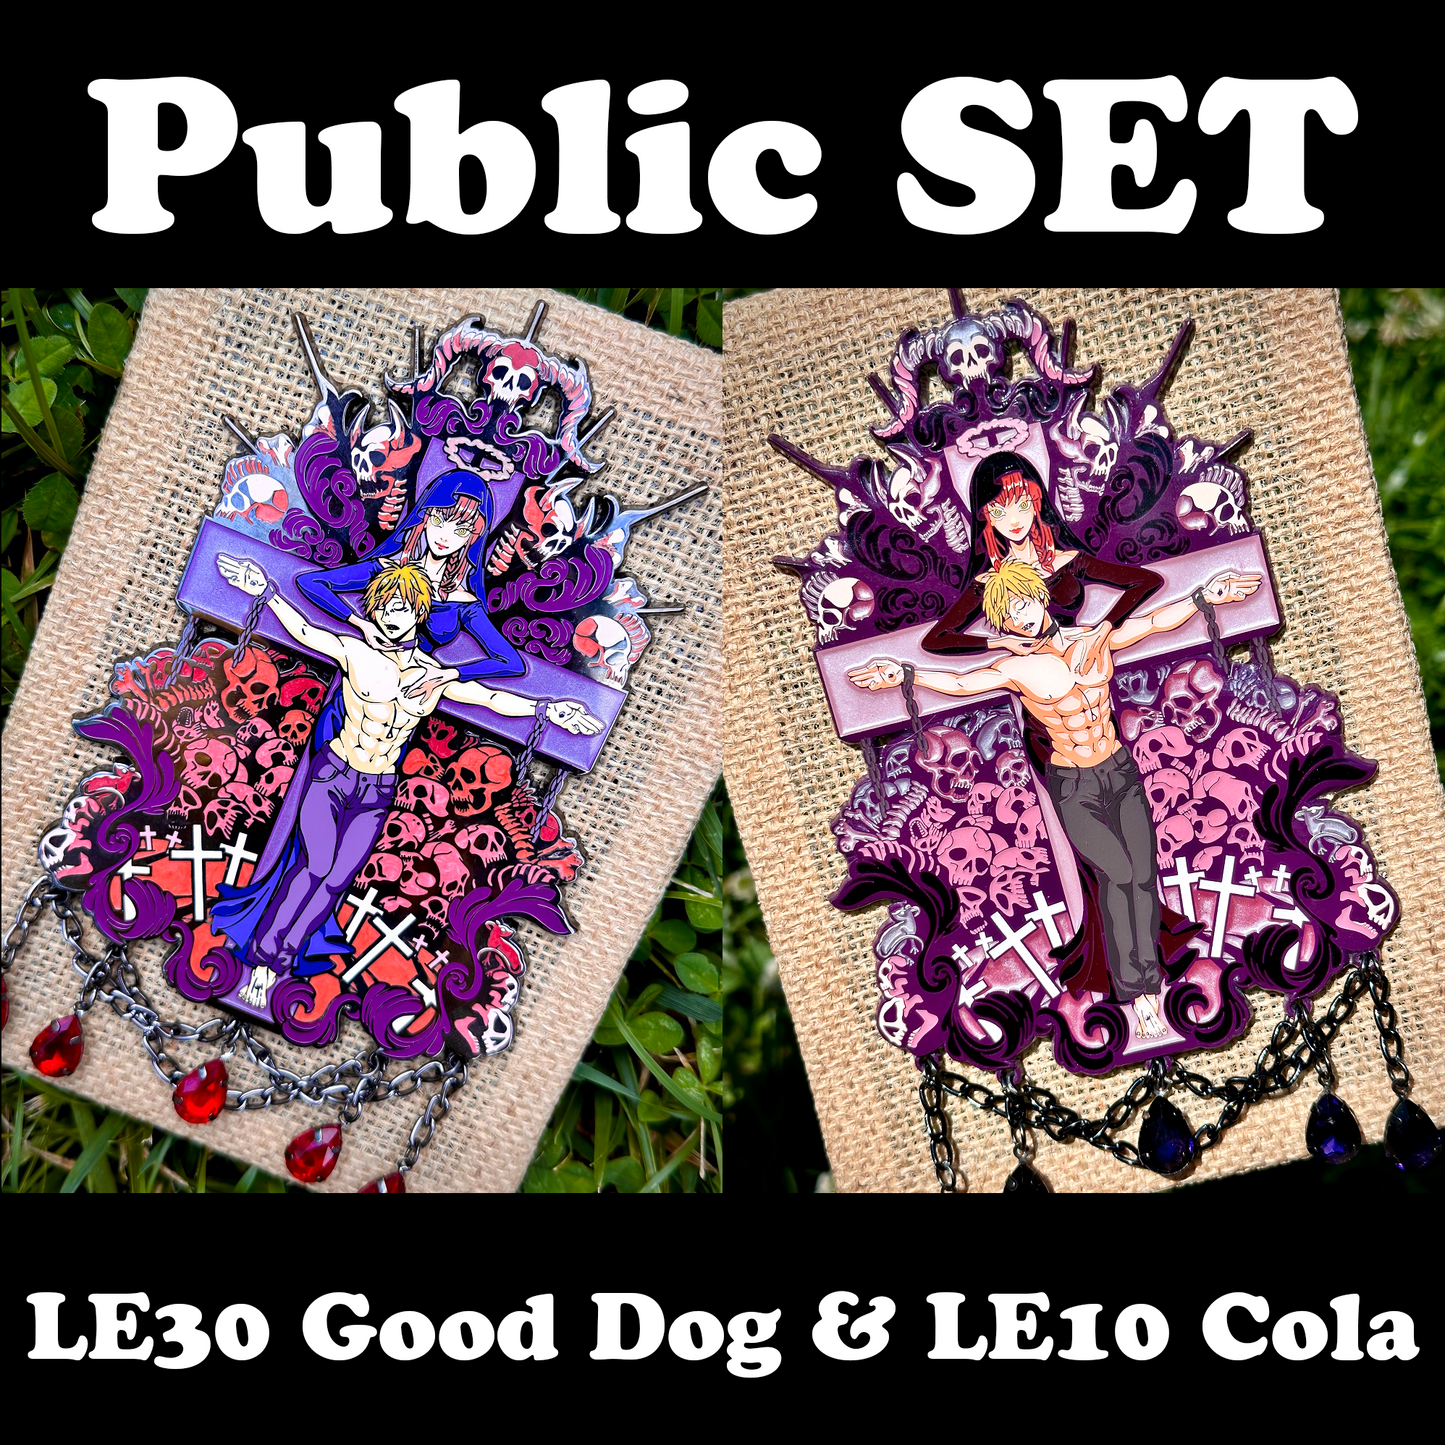 Public Set: Good Dog & Cola